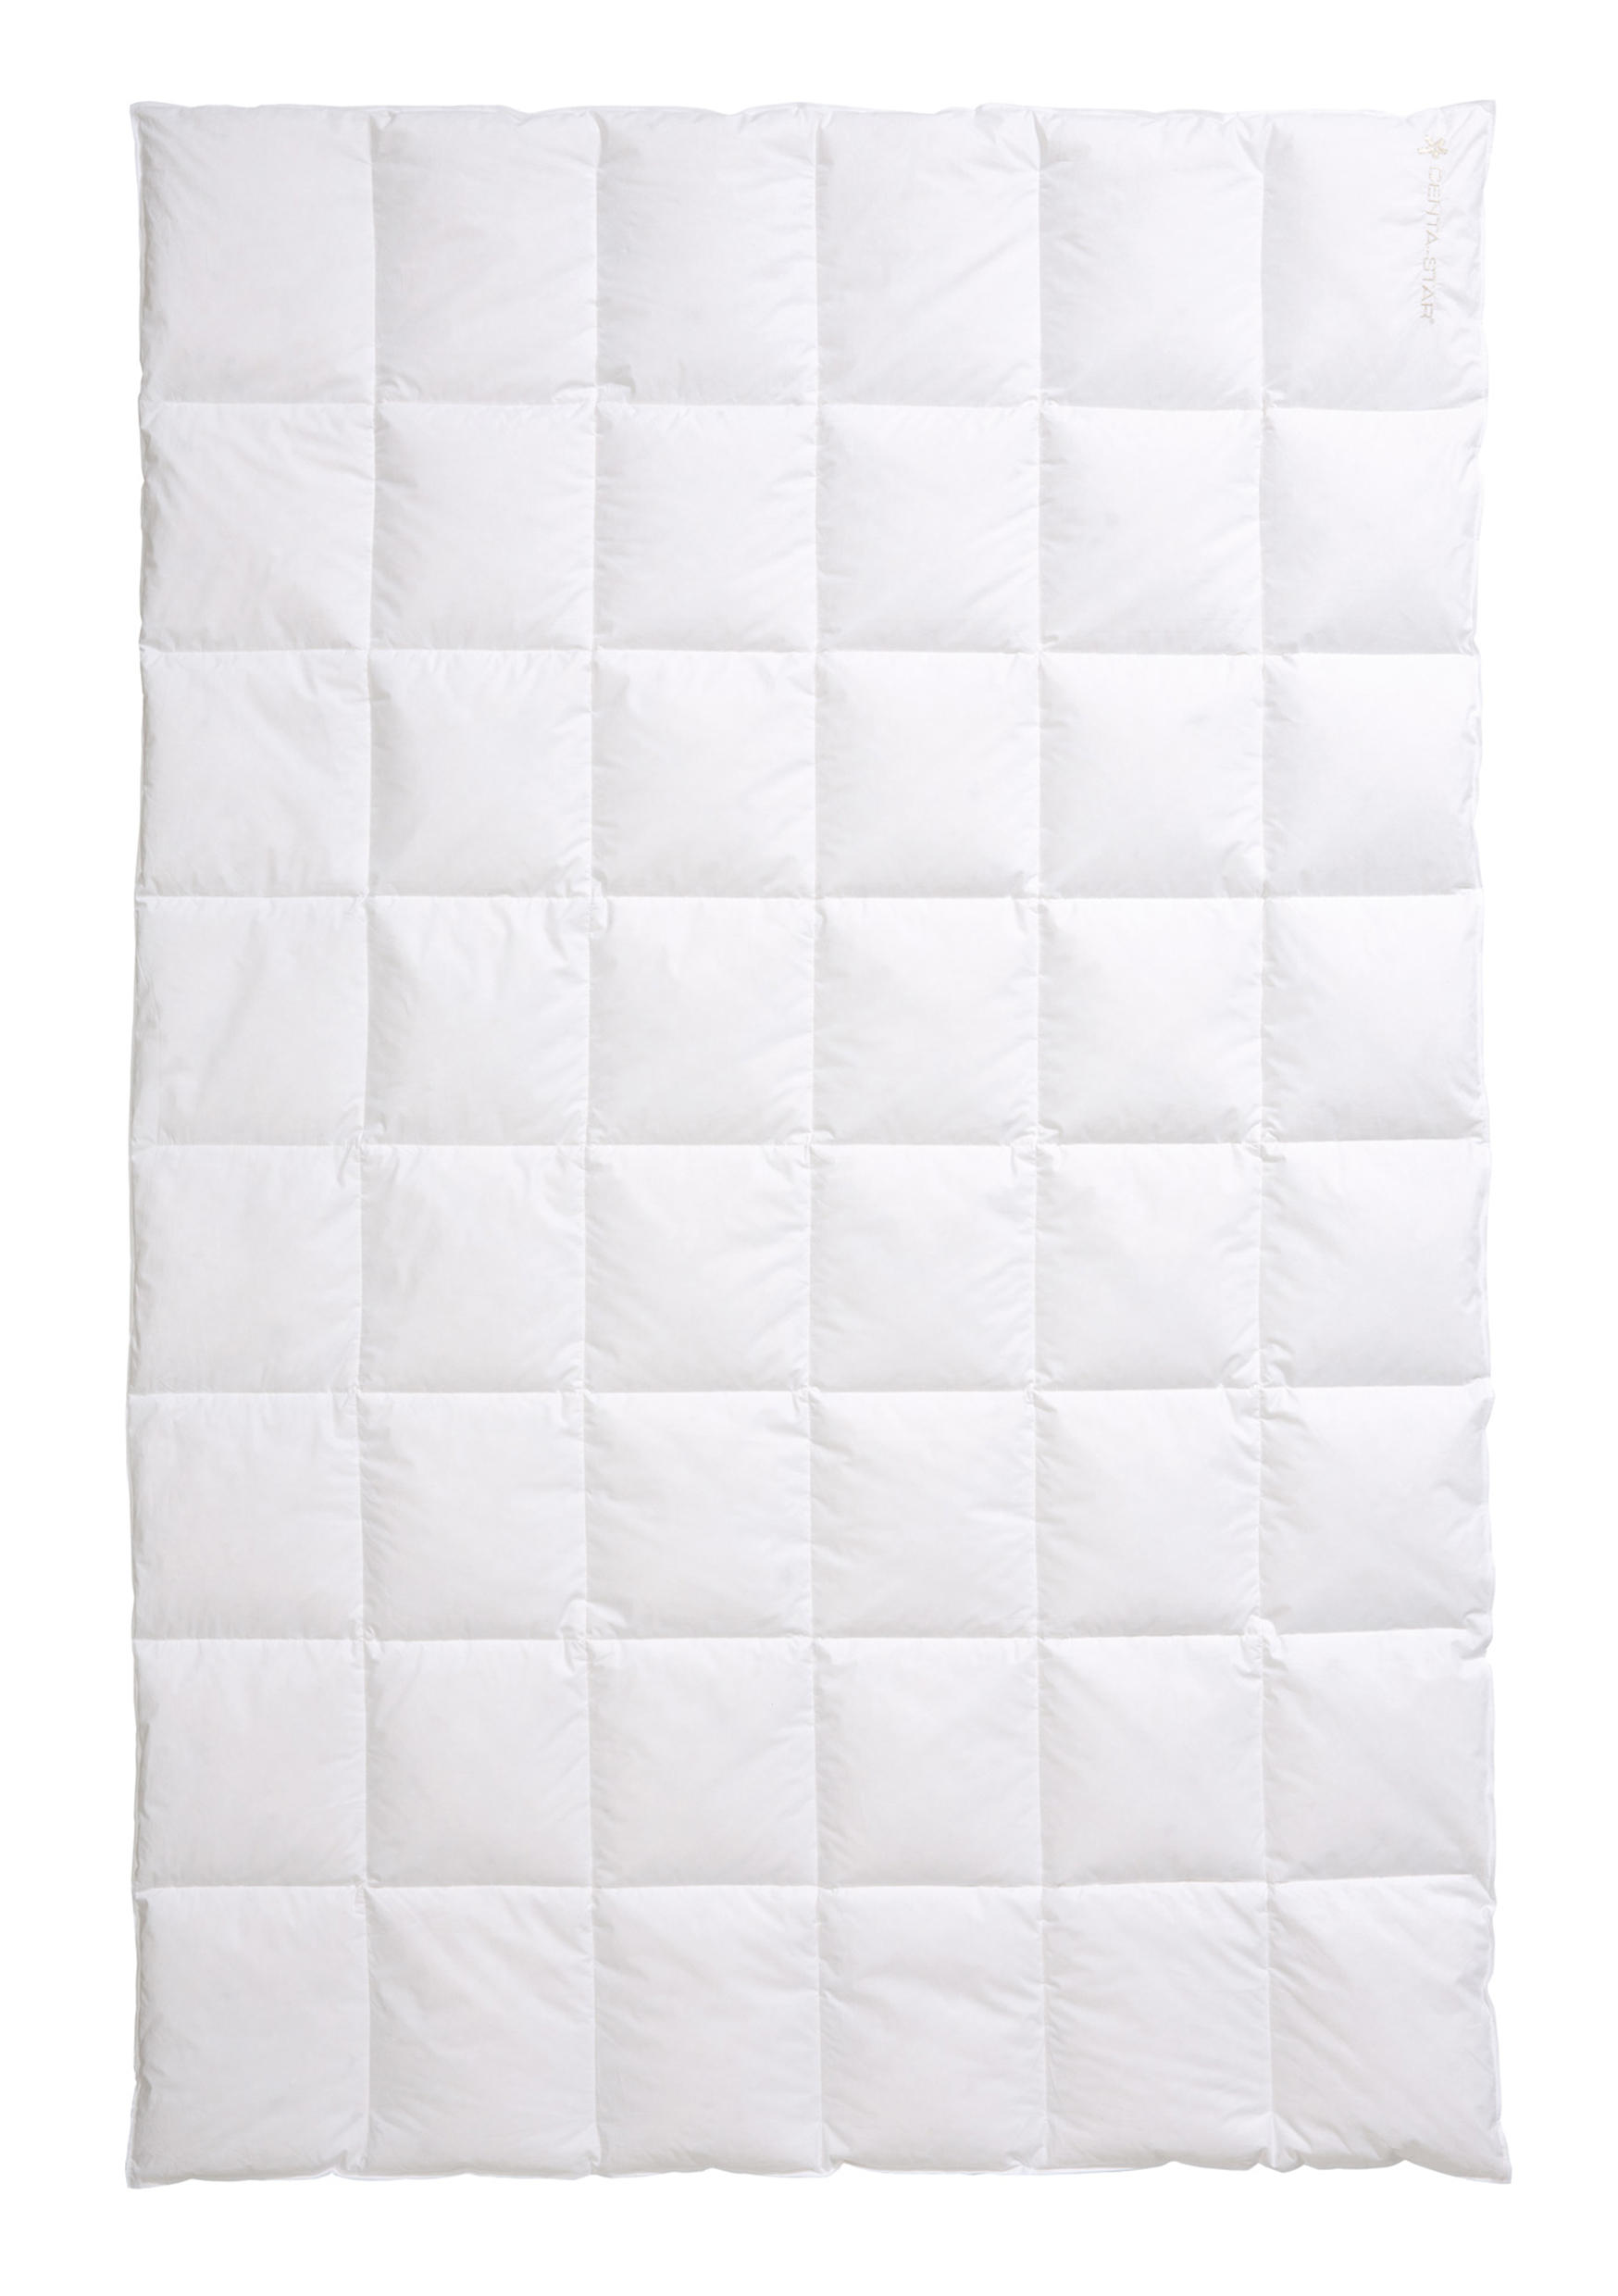 SOMMERBETT  Harmony  200/220 cm   - Weiß, Basics, Textil (200/220cm) - Centa-Star